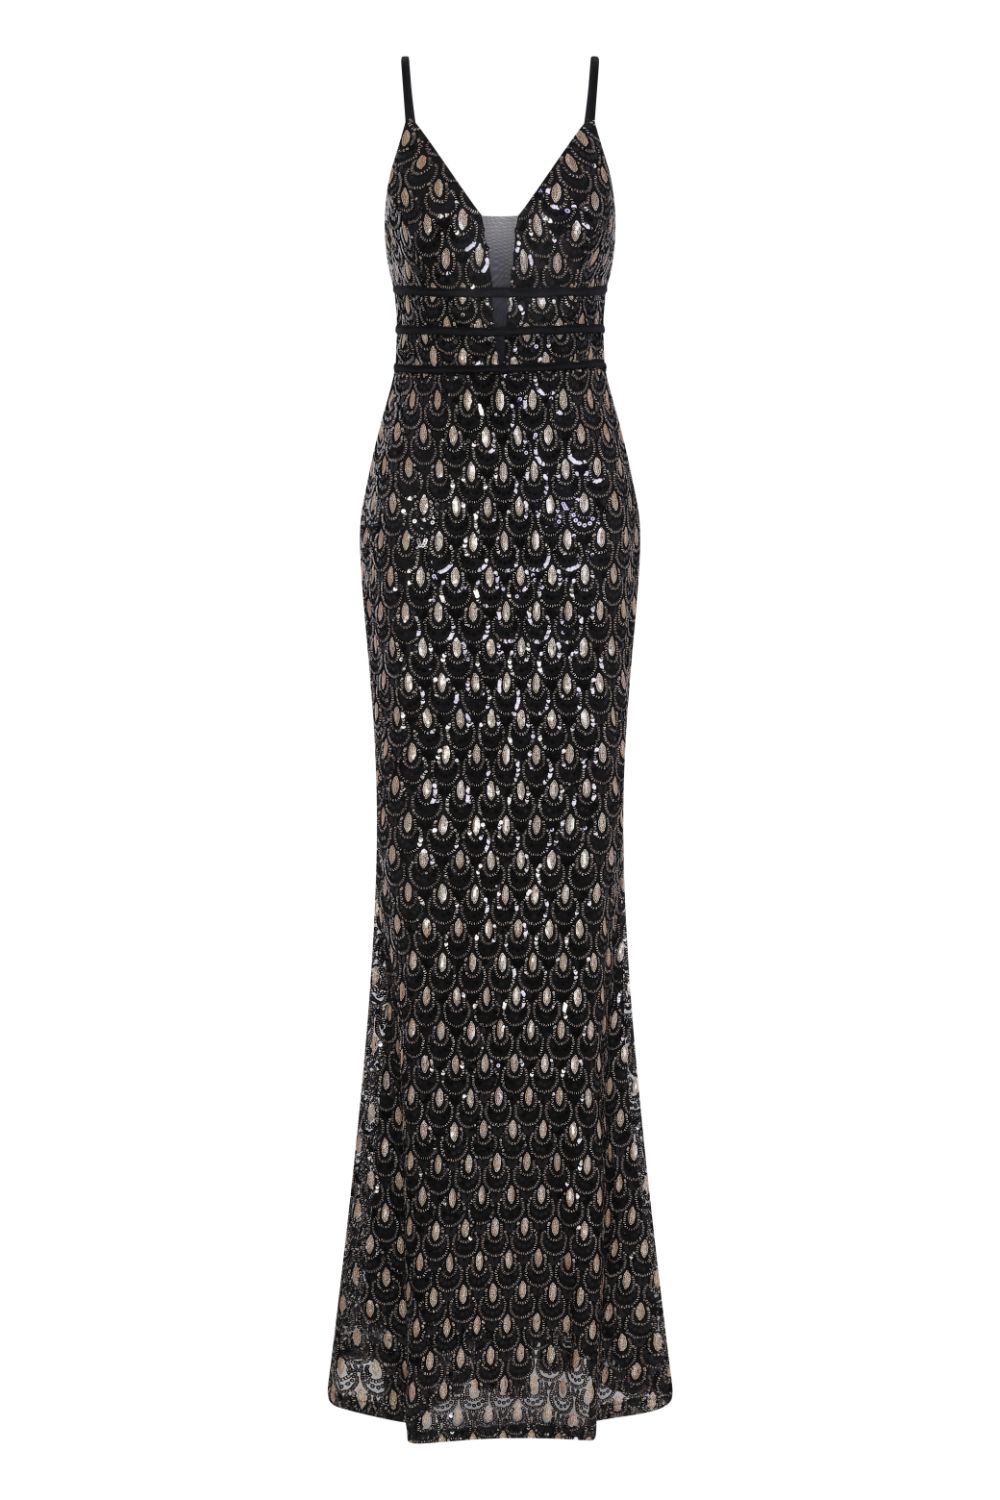 Monroe Black Gold Alluring Sequin Mermaid Maxi Dress